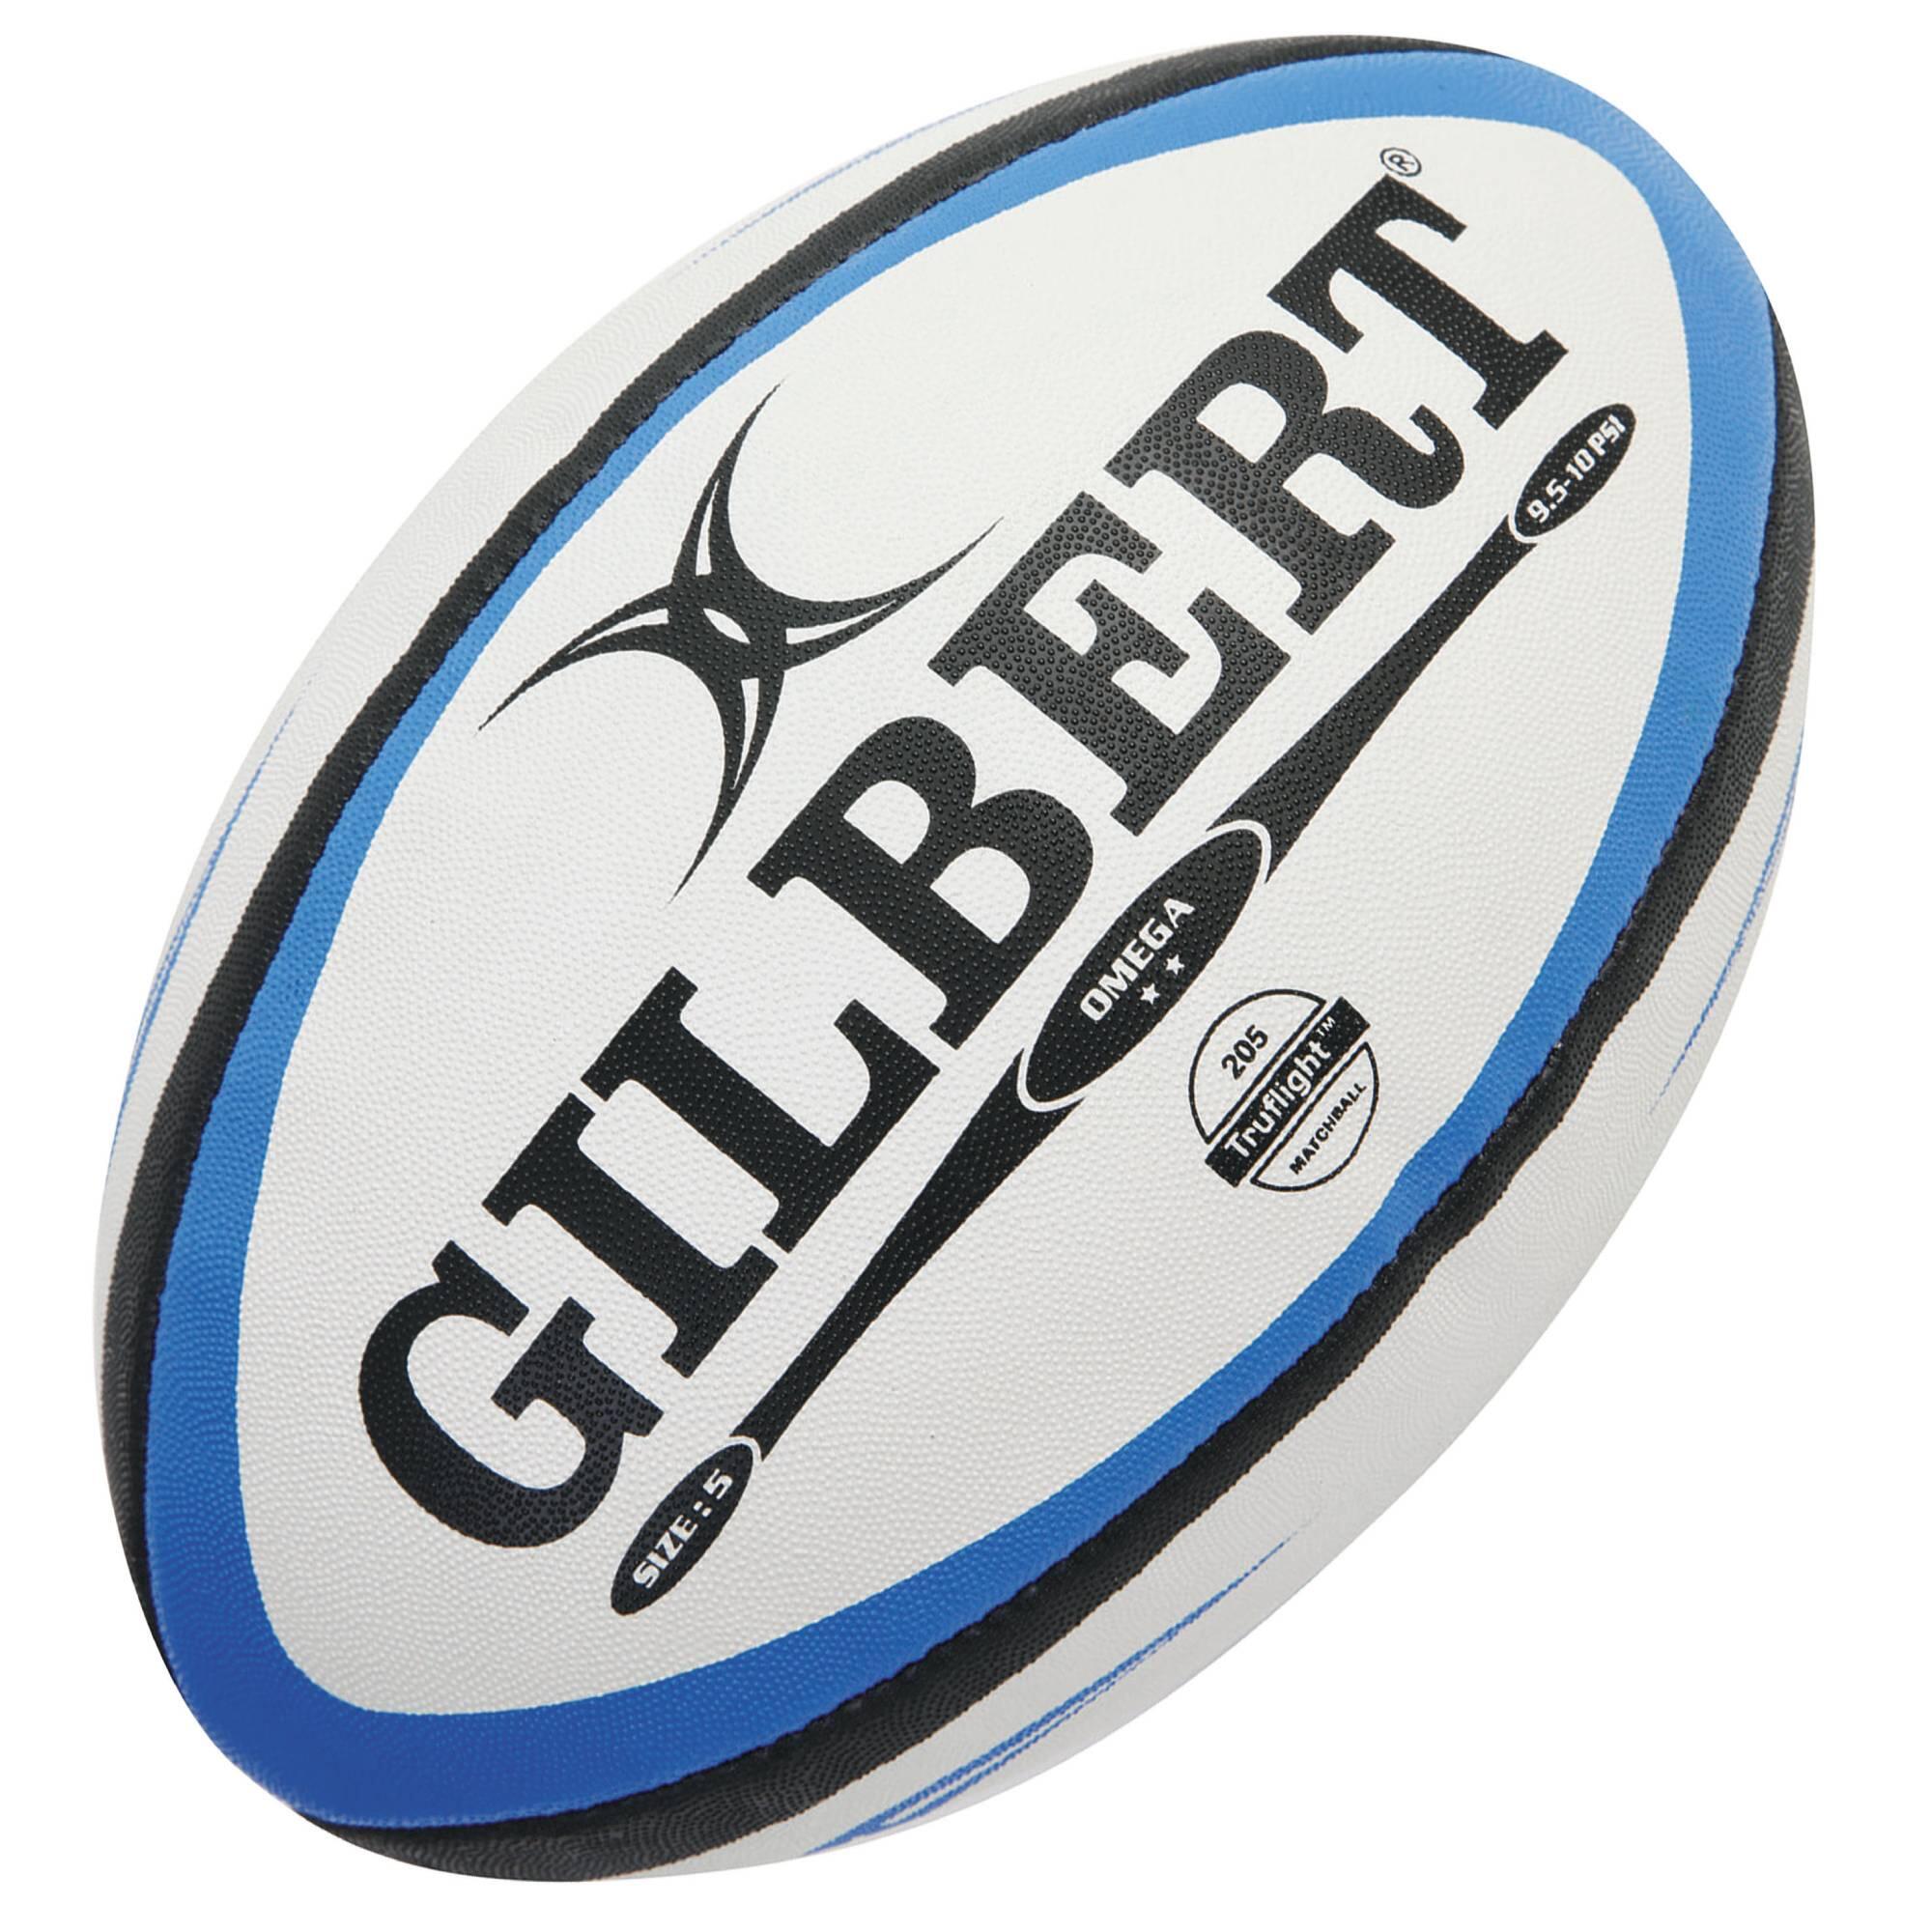 Minge Rugby Omega Mărimea 5 Albastru decathlon.ro  Mingi rugby si accesorii